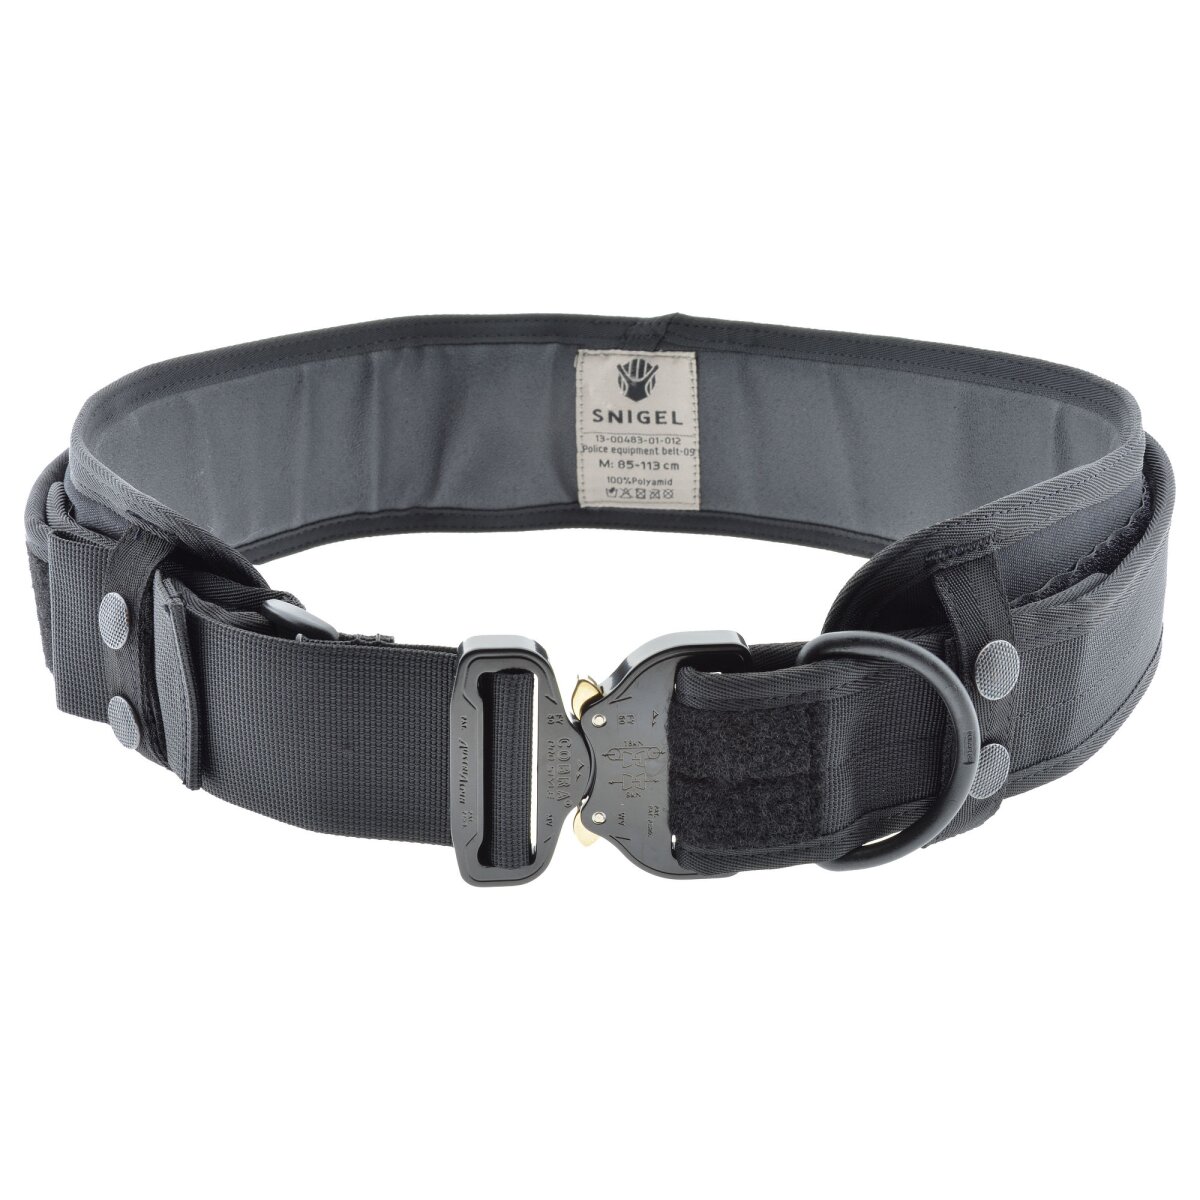 https://www.blackshadow.at/media/image/product/20842/lg/polizei-gurtset-police-equipment-belt.jpg